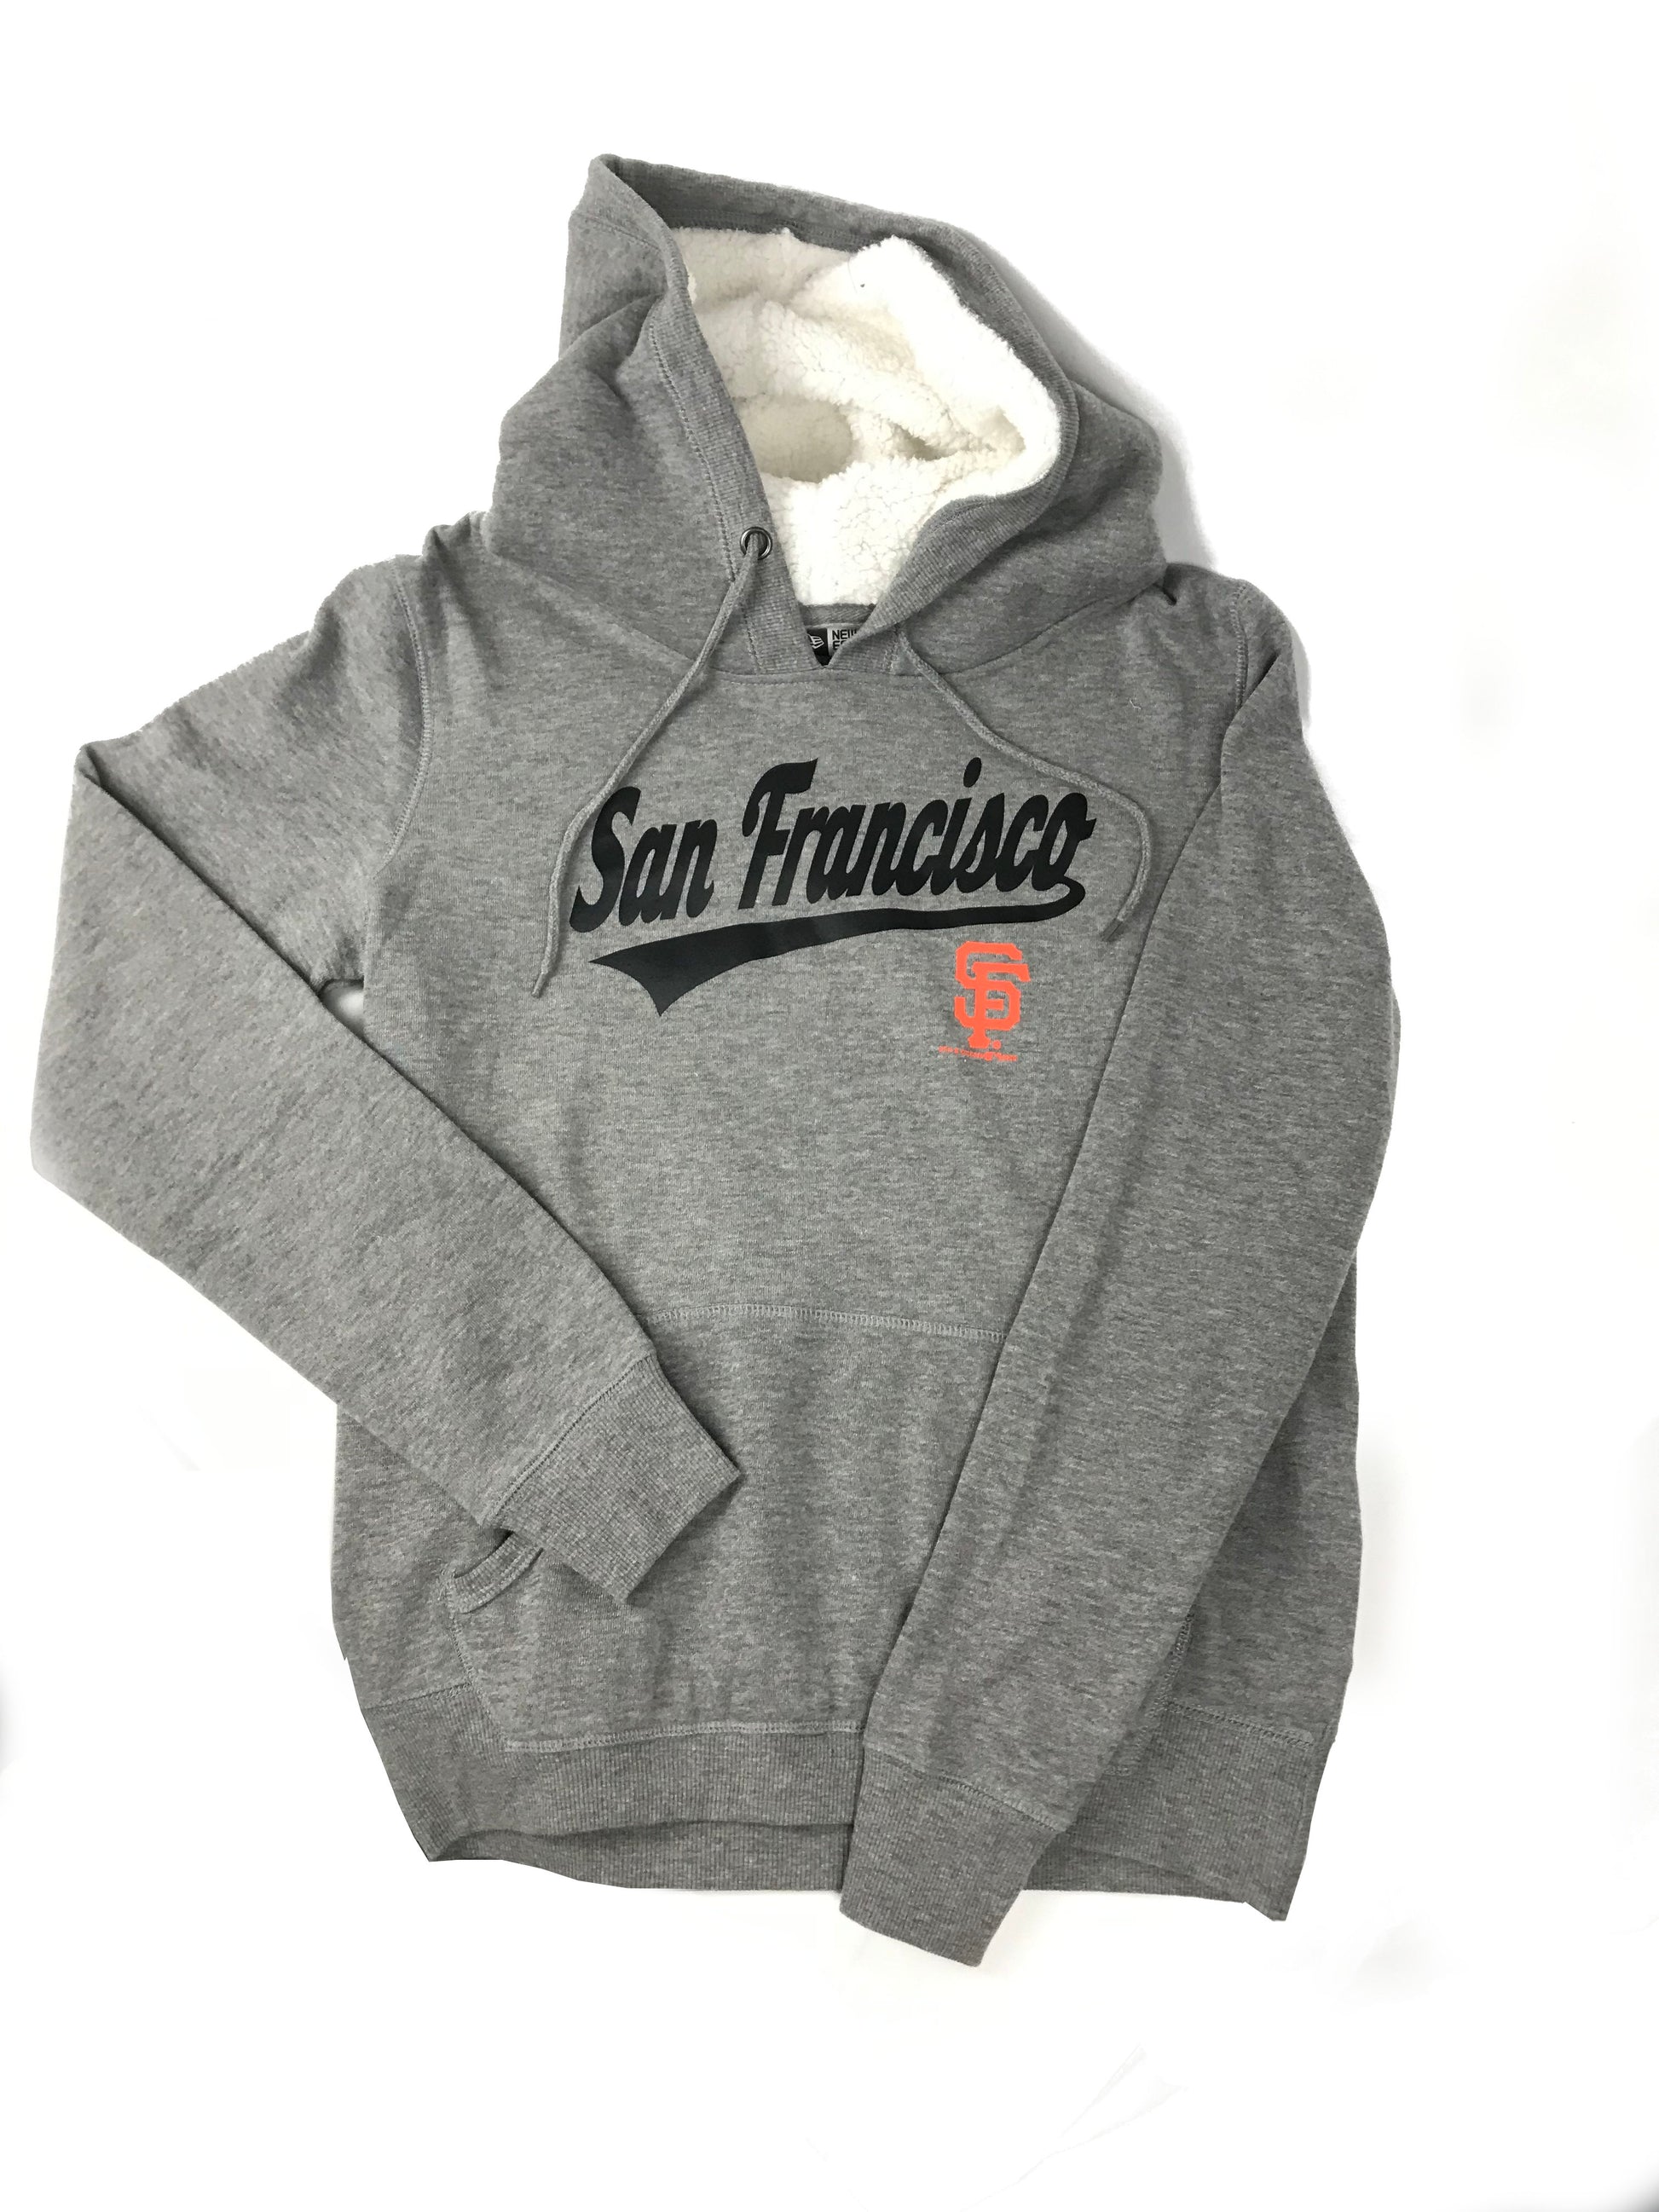 FIFTH&OCEAN San Francisco Giants Women's Foil City Name Hoodie Sweater 20 Gray / XL